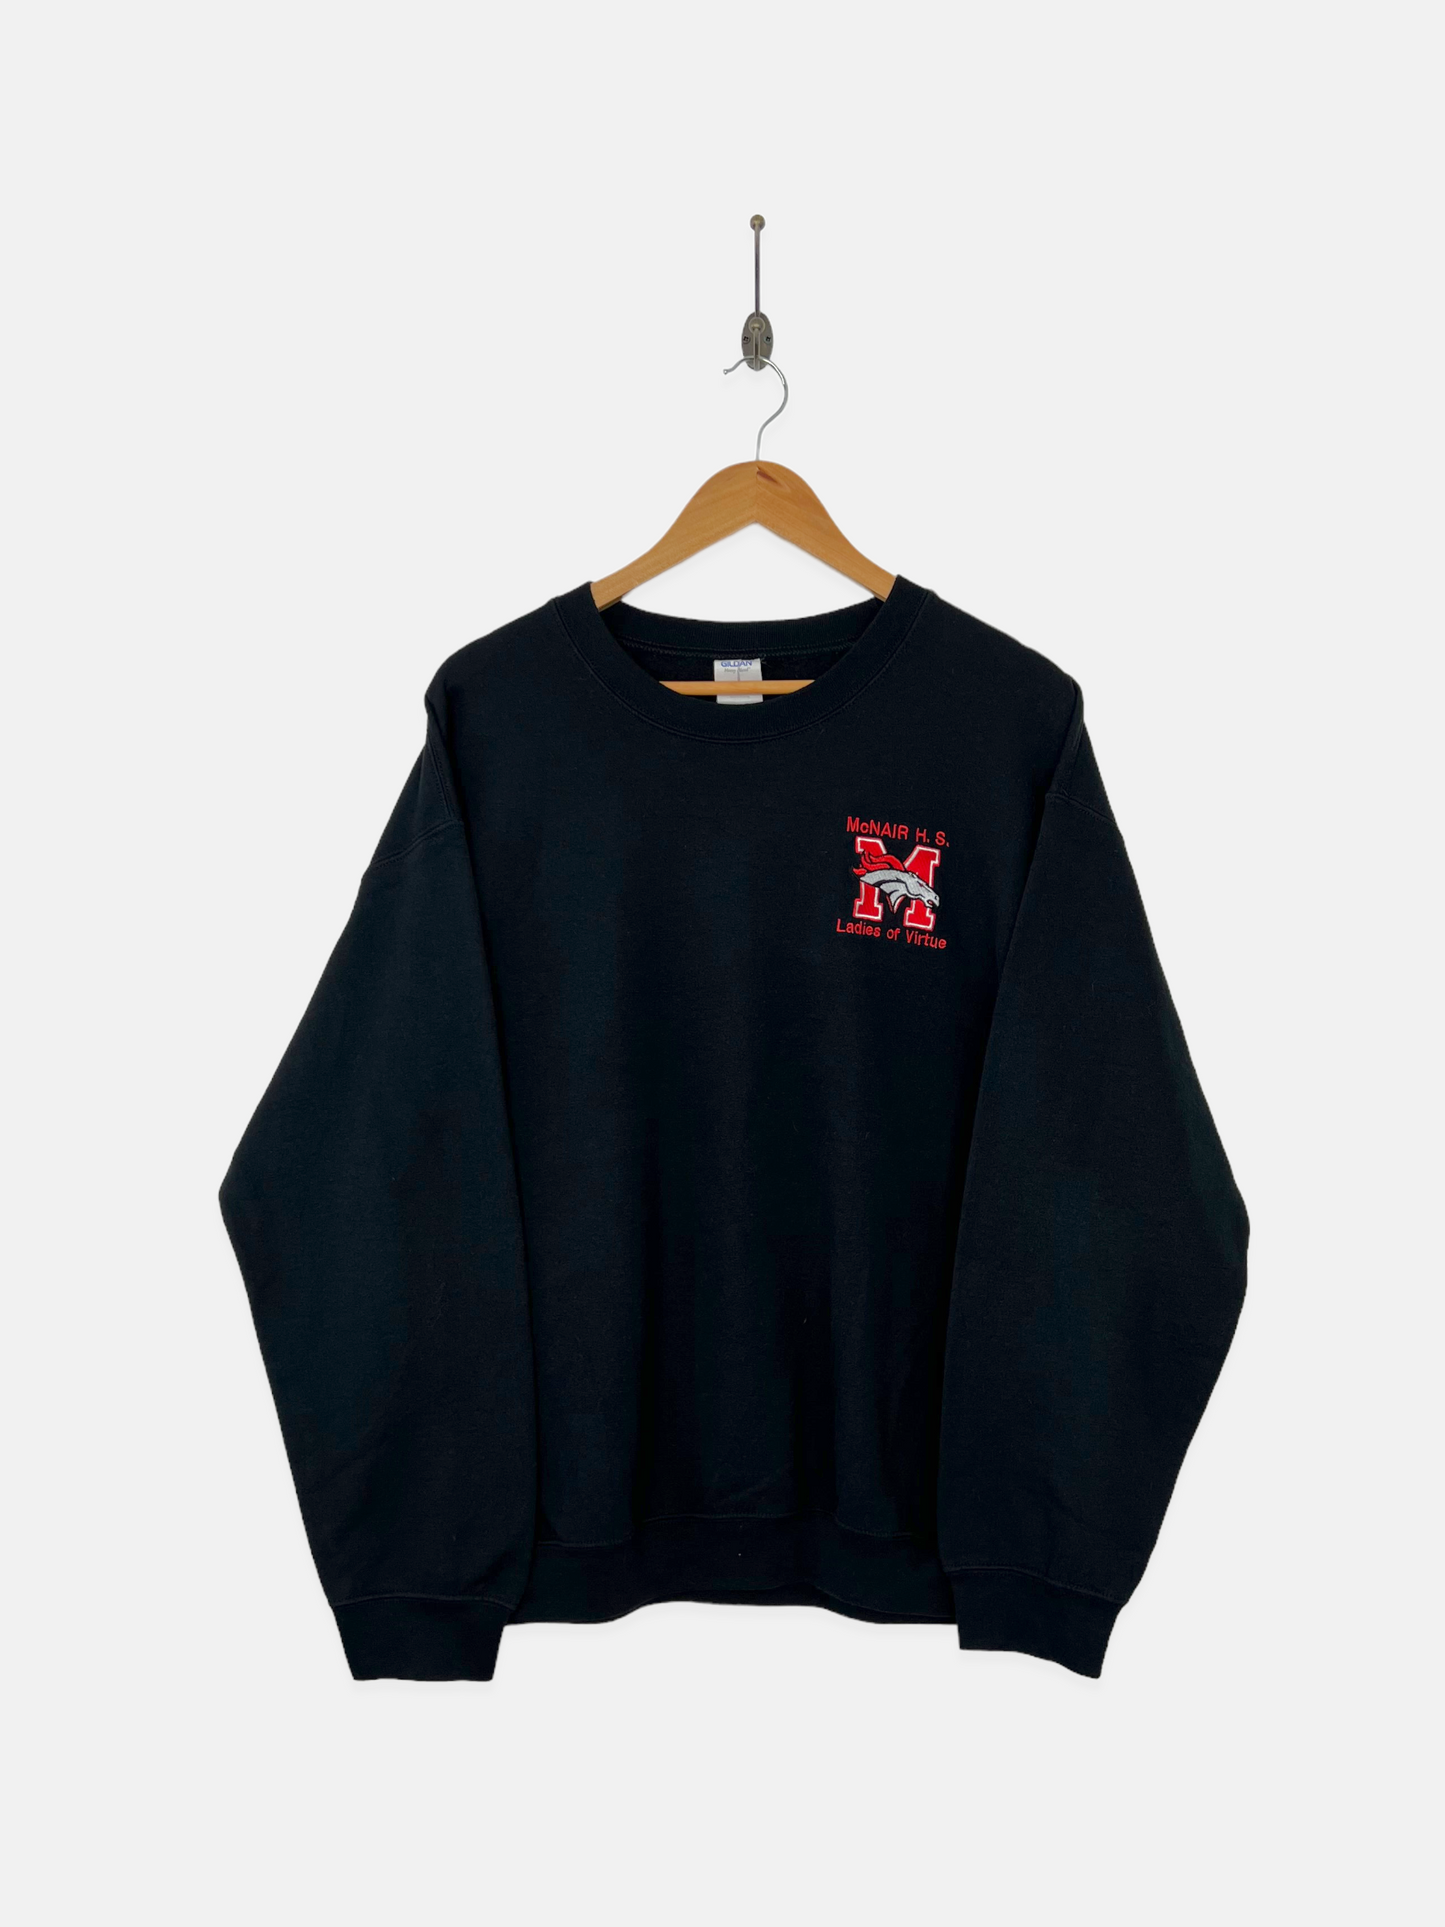 90's McNair High School Embroidered Vintage Sweatshirt Size M-L